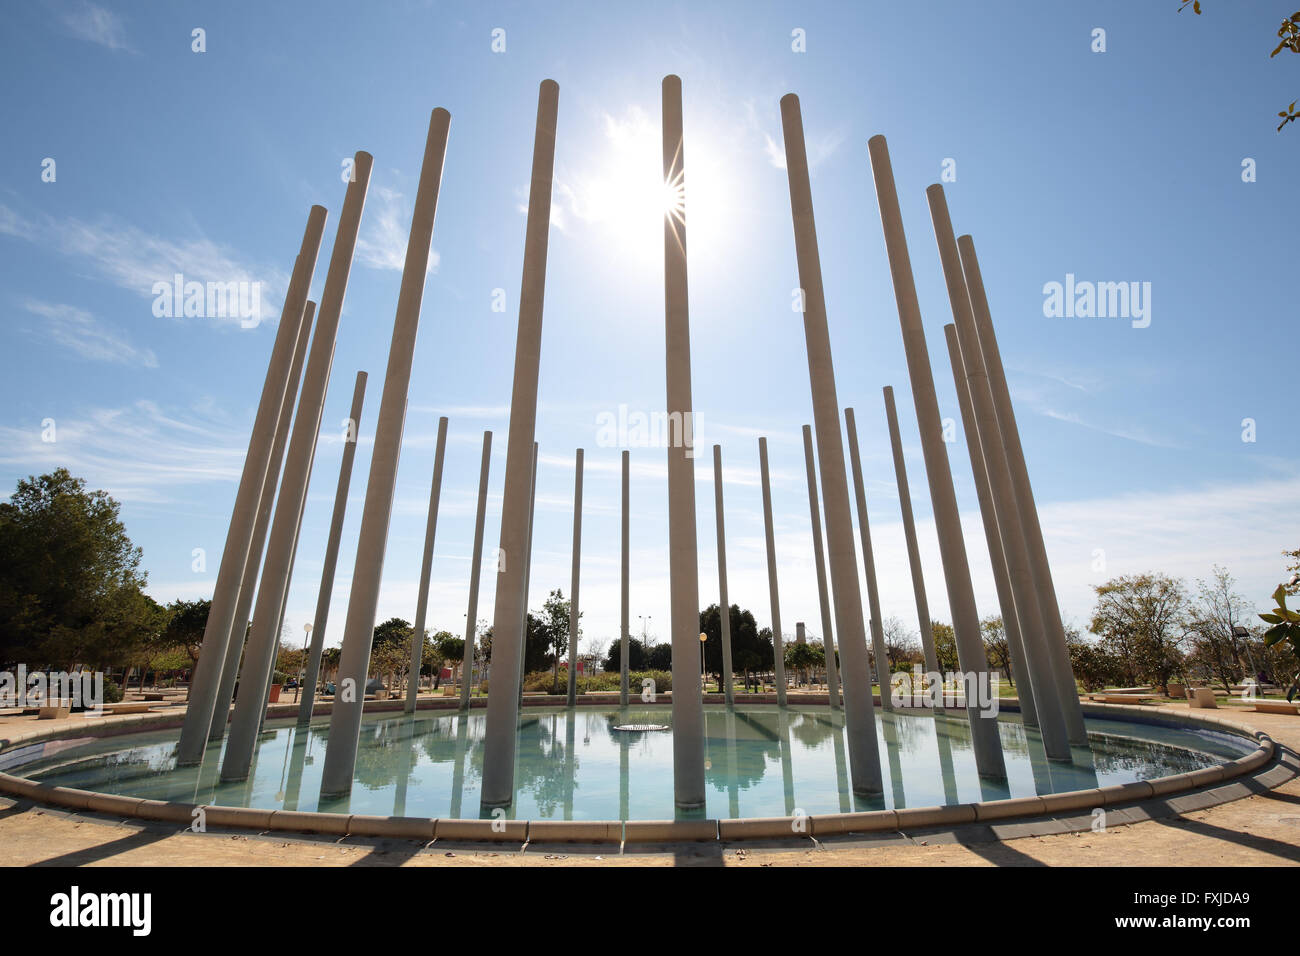 San Vicente del Raspeig, Spain. April 12, 2016: Vertical columns of concrete in the Parque Lo Torrent Stock Photo